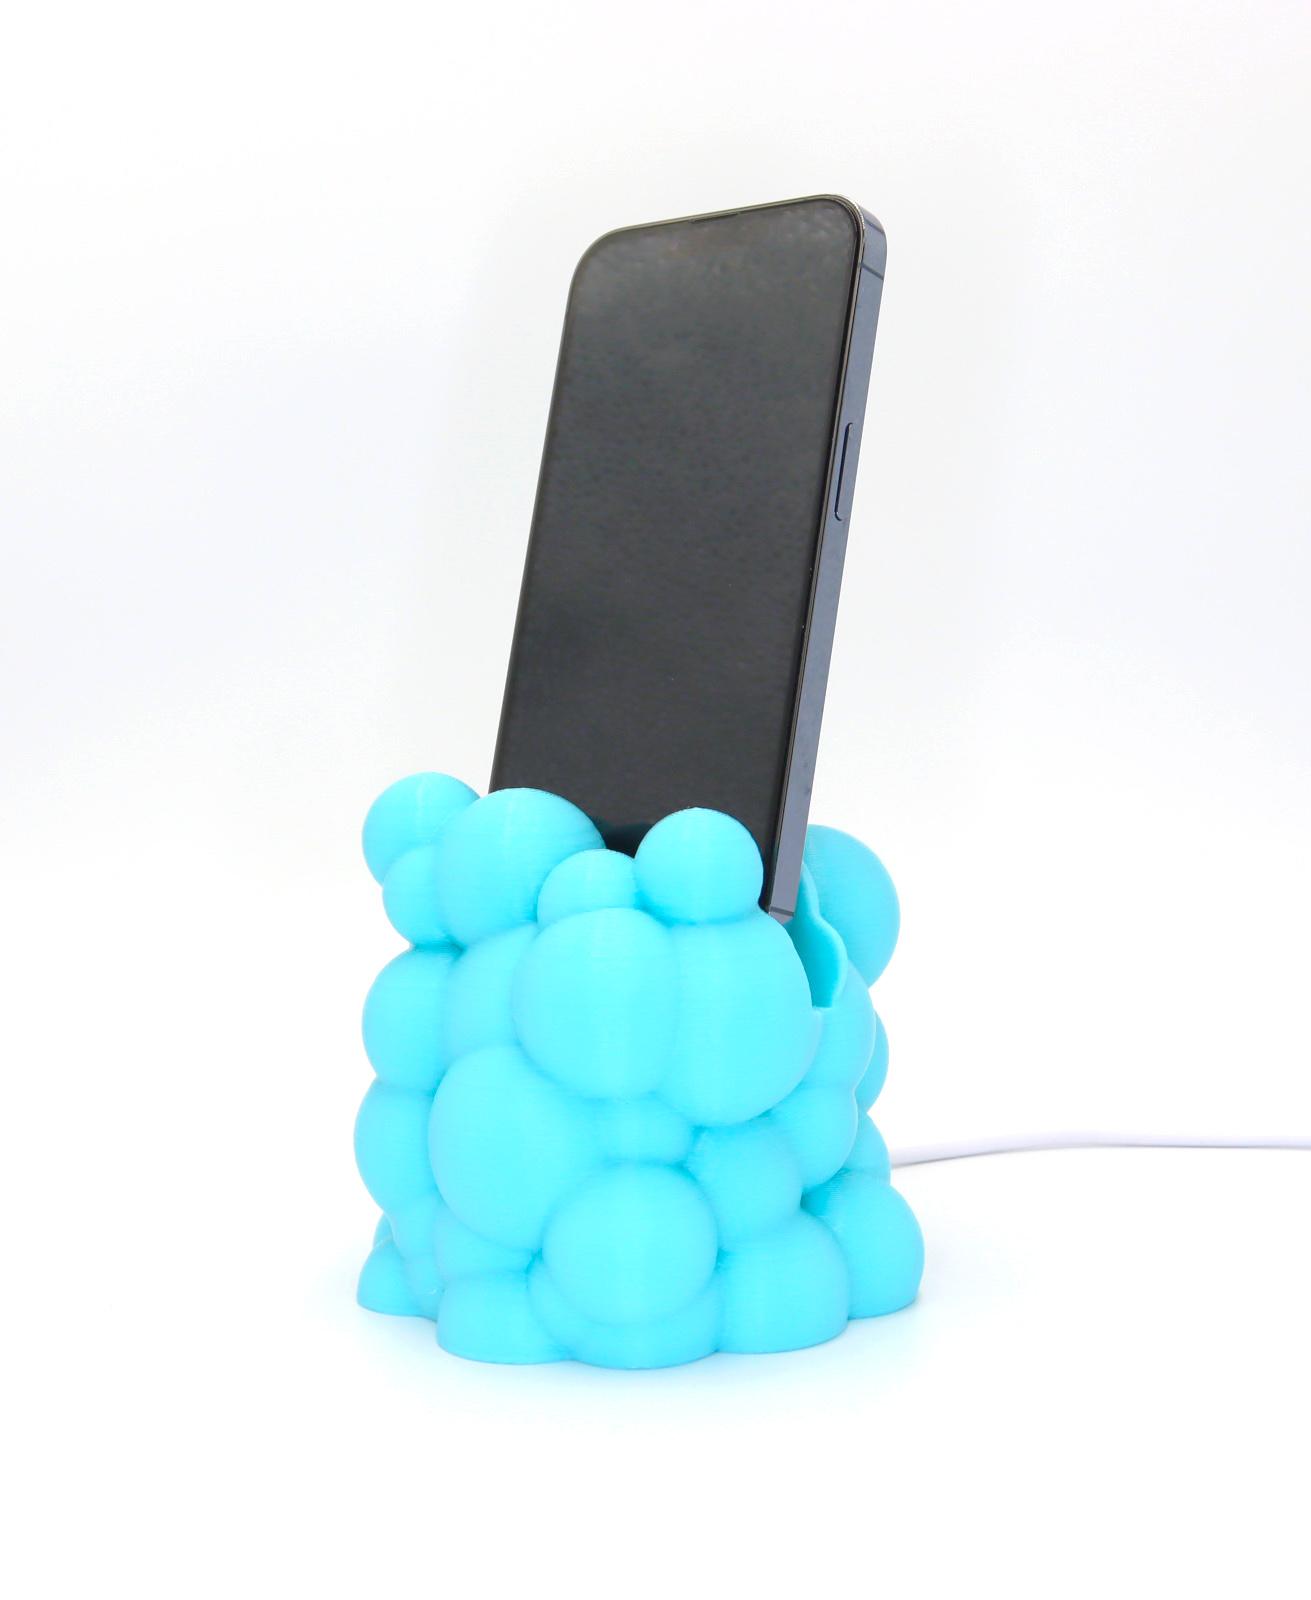 Bubbles phone dock 3d model